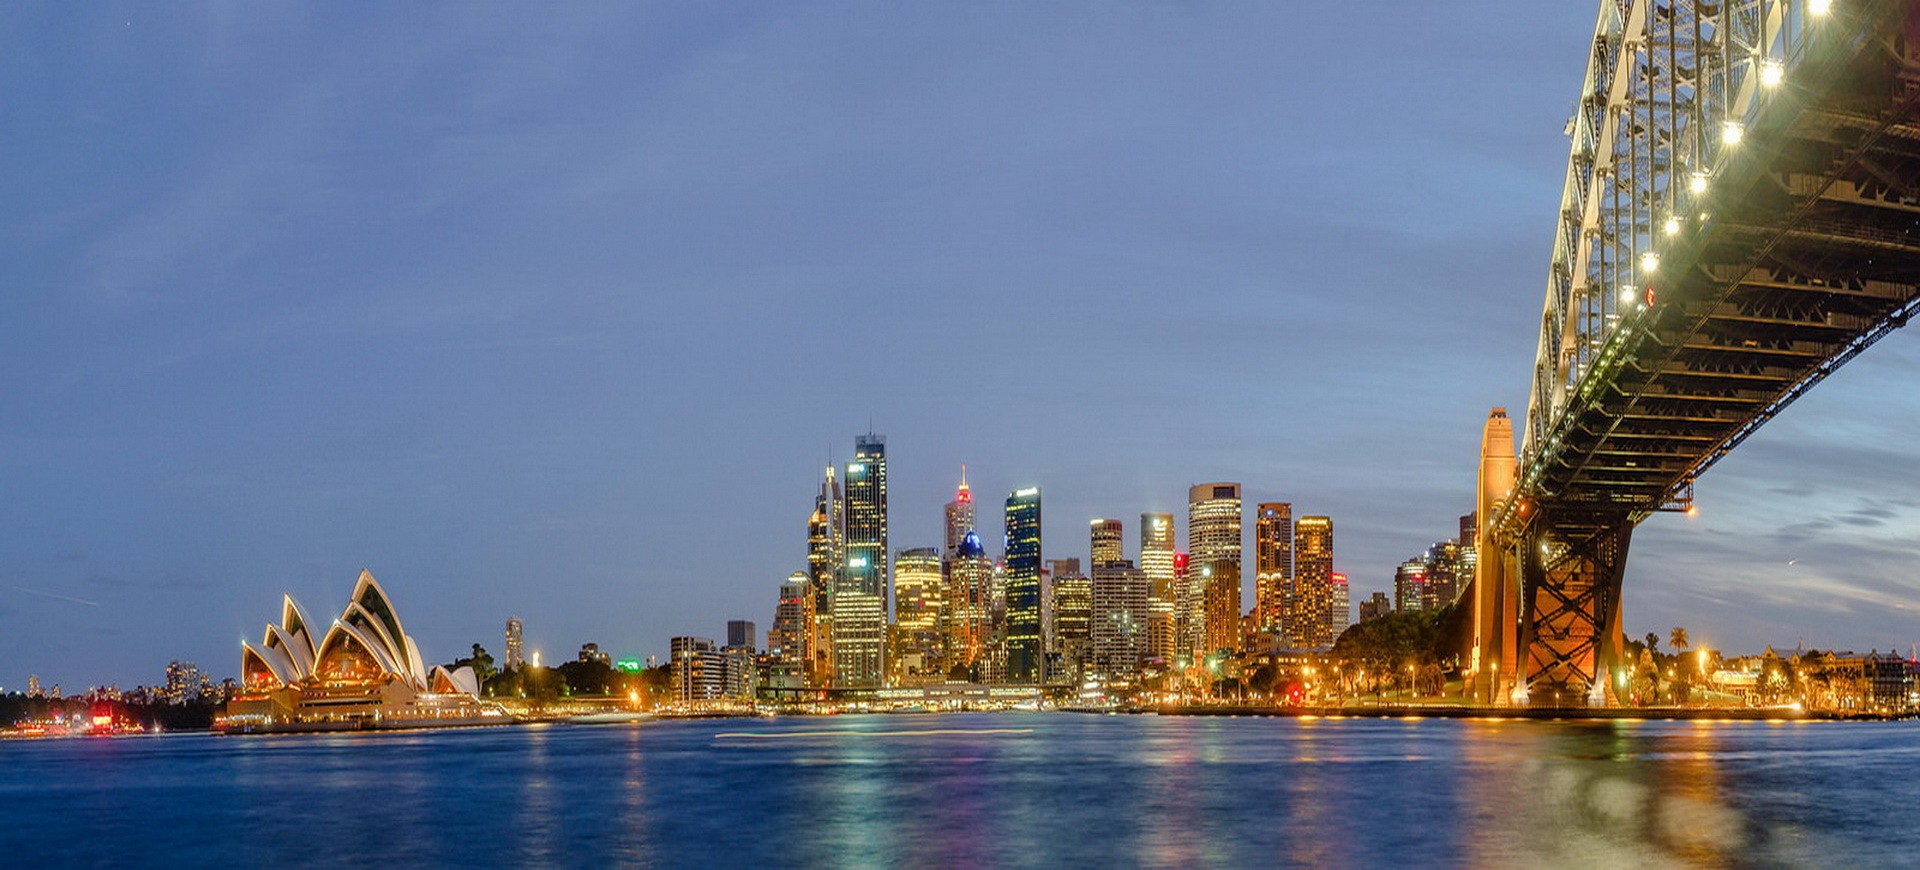 Australie Sydney by night